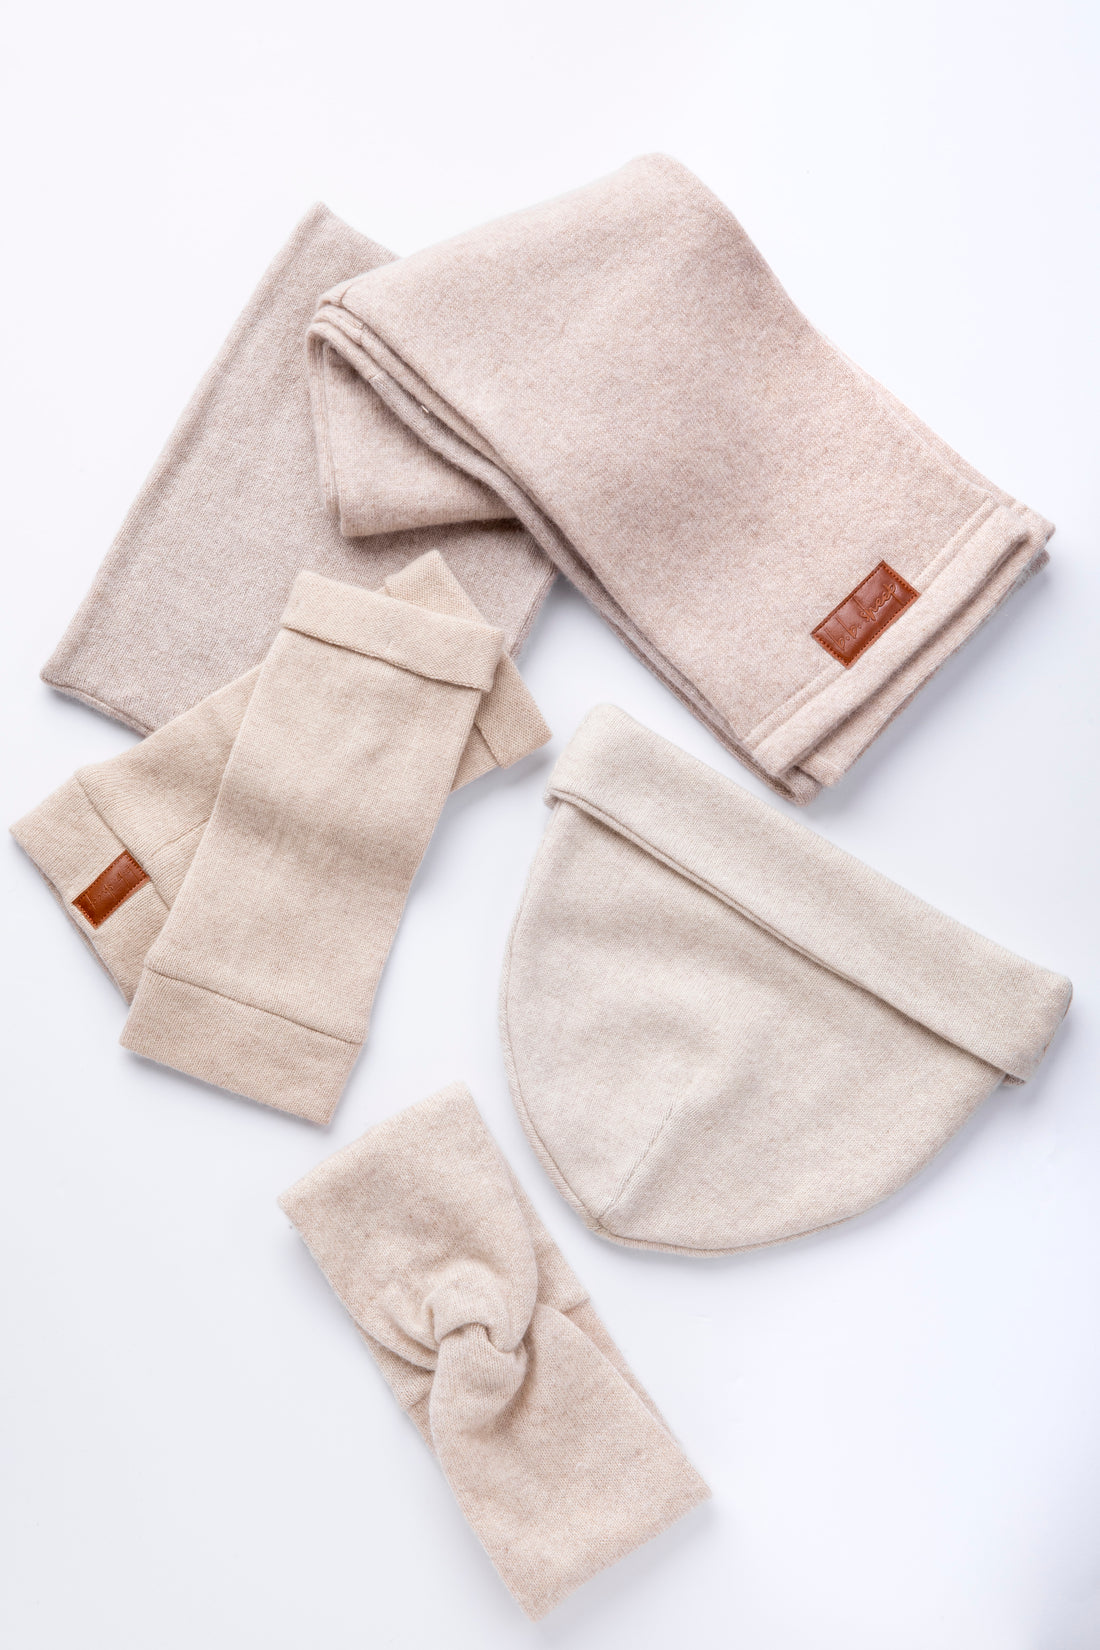 Beige - Winter Ready Box - Fingerless gloves, Headband, Infinity scarf, Beanie, Neck warmer